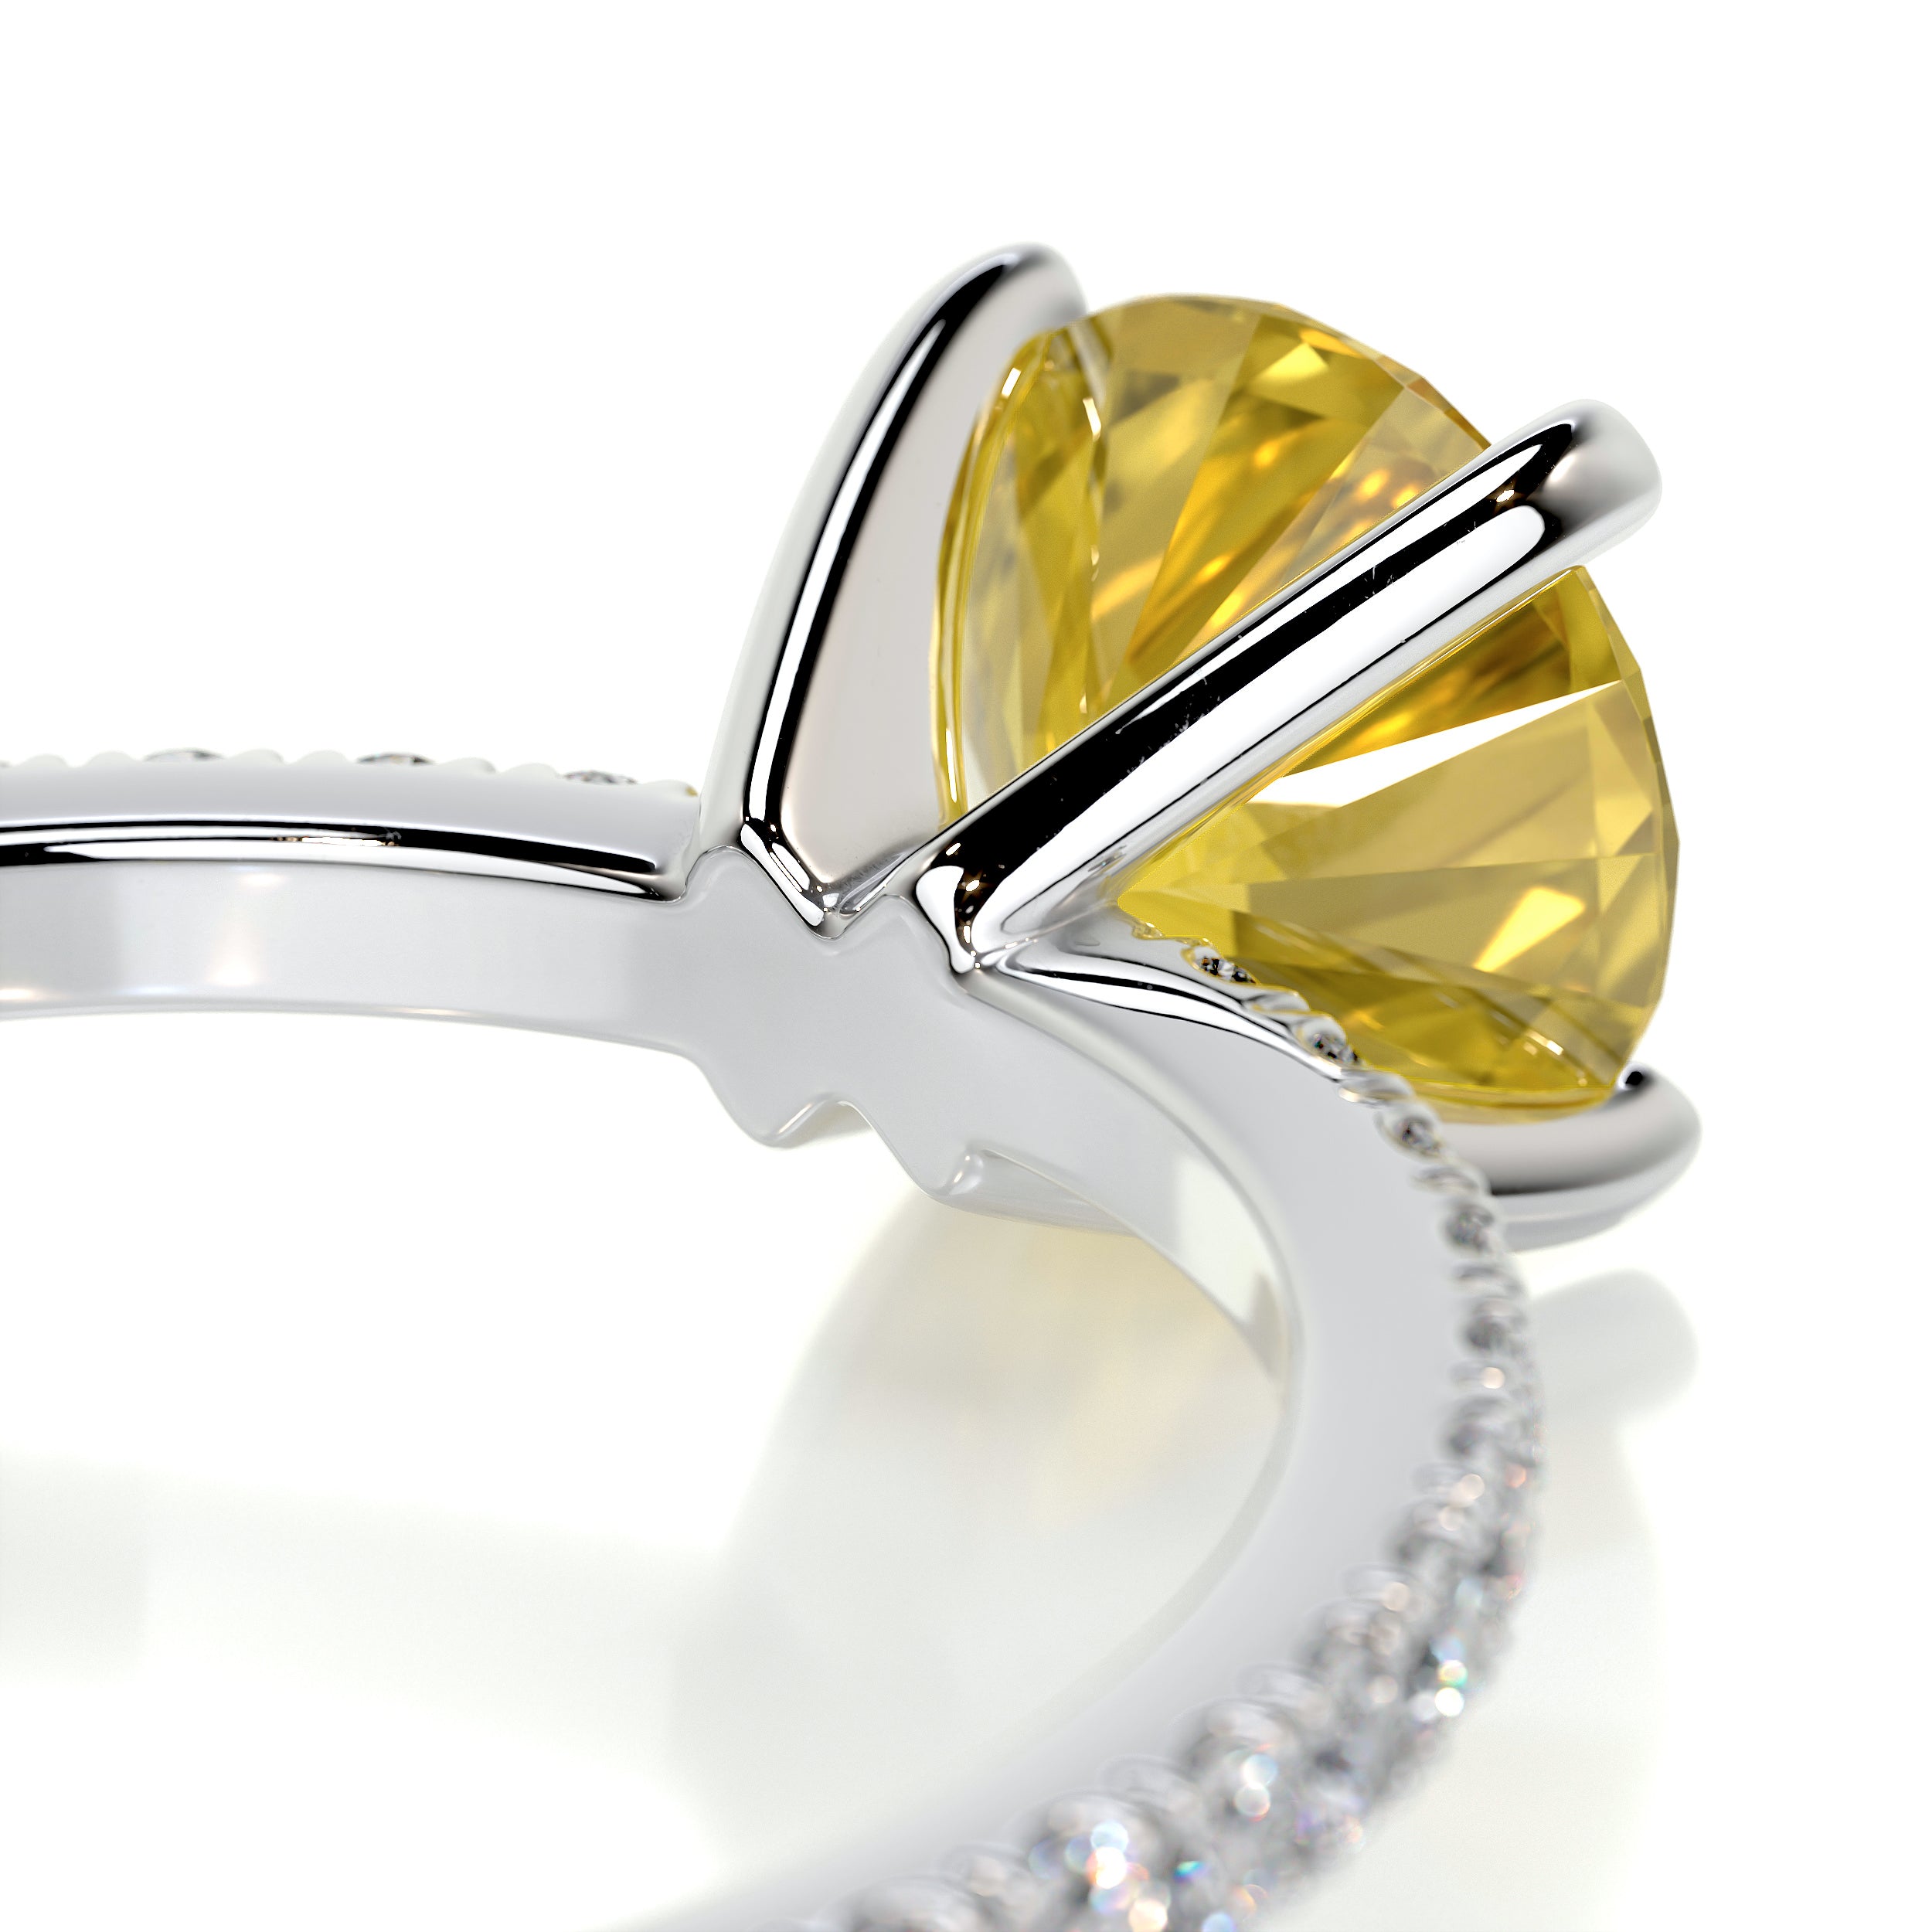 Stephanie Diamond Engagement Ring -18K White Gold